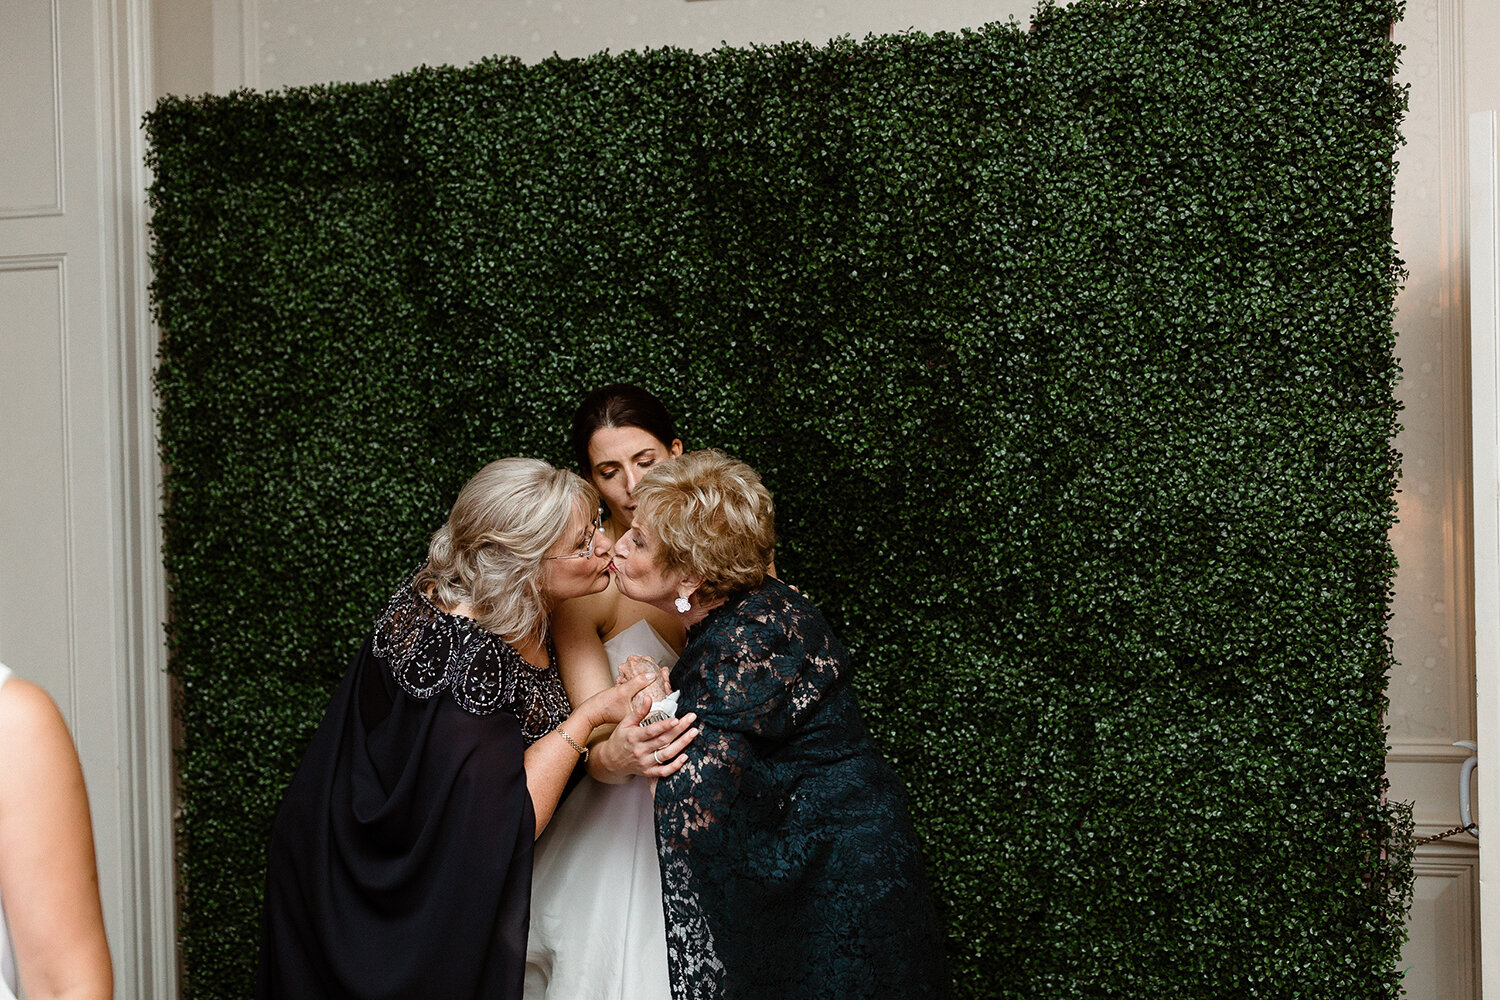 Best-Wedding-Venues-Toronto-Alternative-Cool-Trendy-Photographers-Ryanne-Hollies-Photography-233.JPG